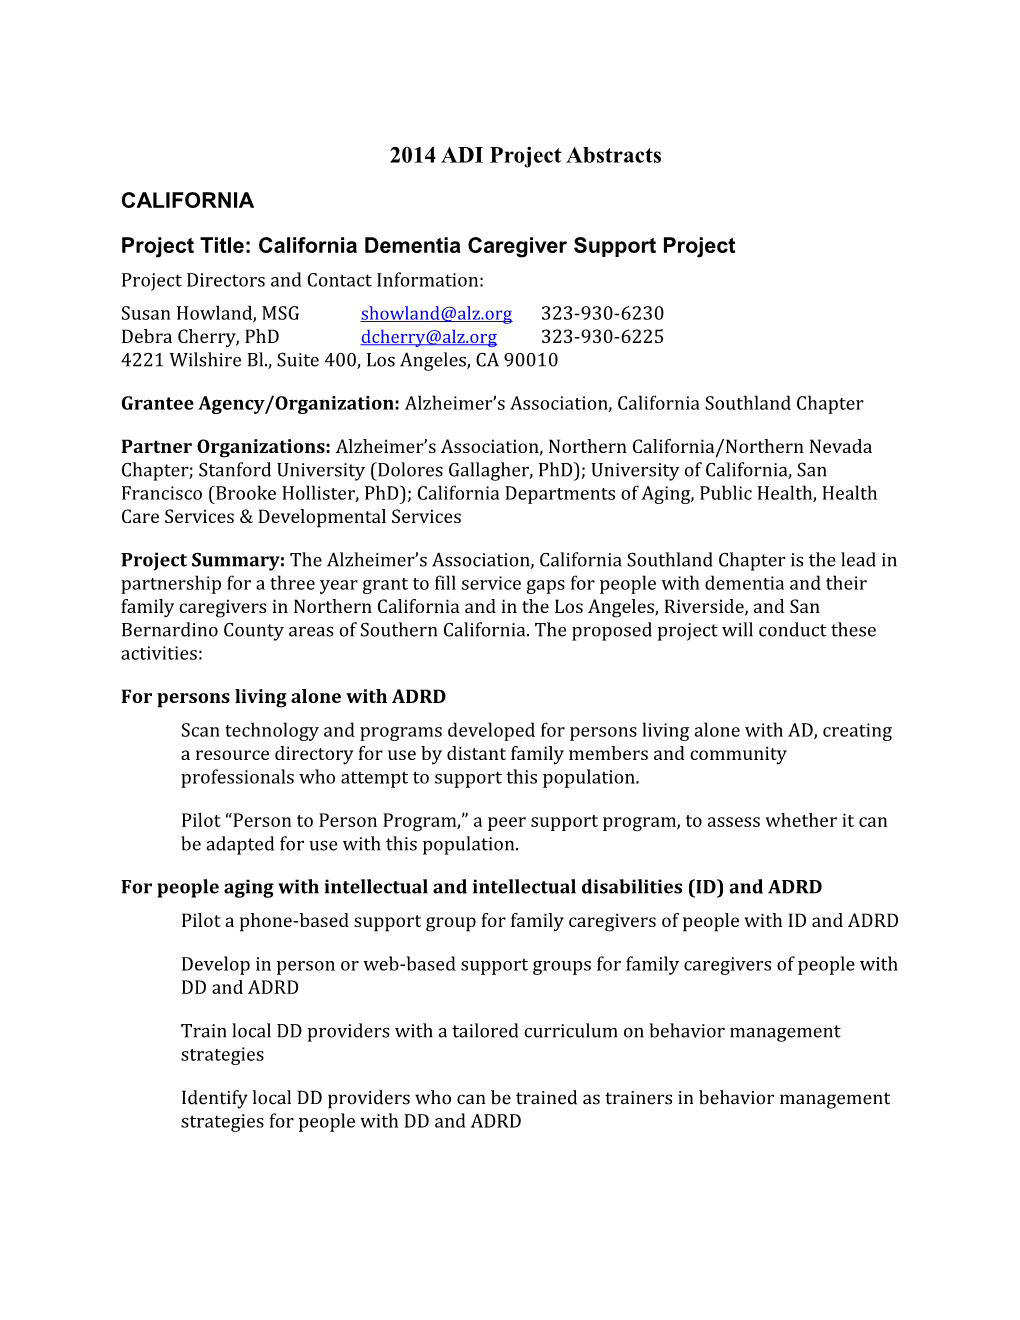 Project Title:California Dementia Caregiver Support Project